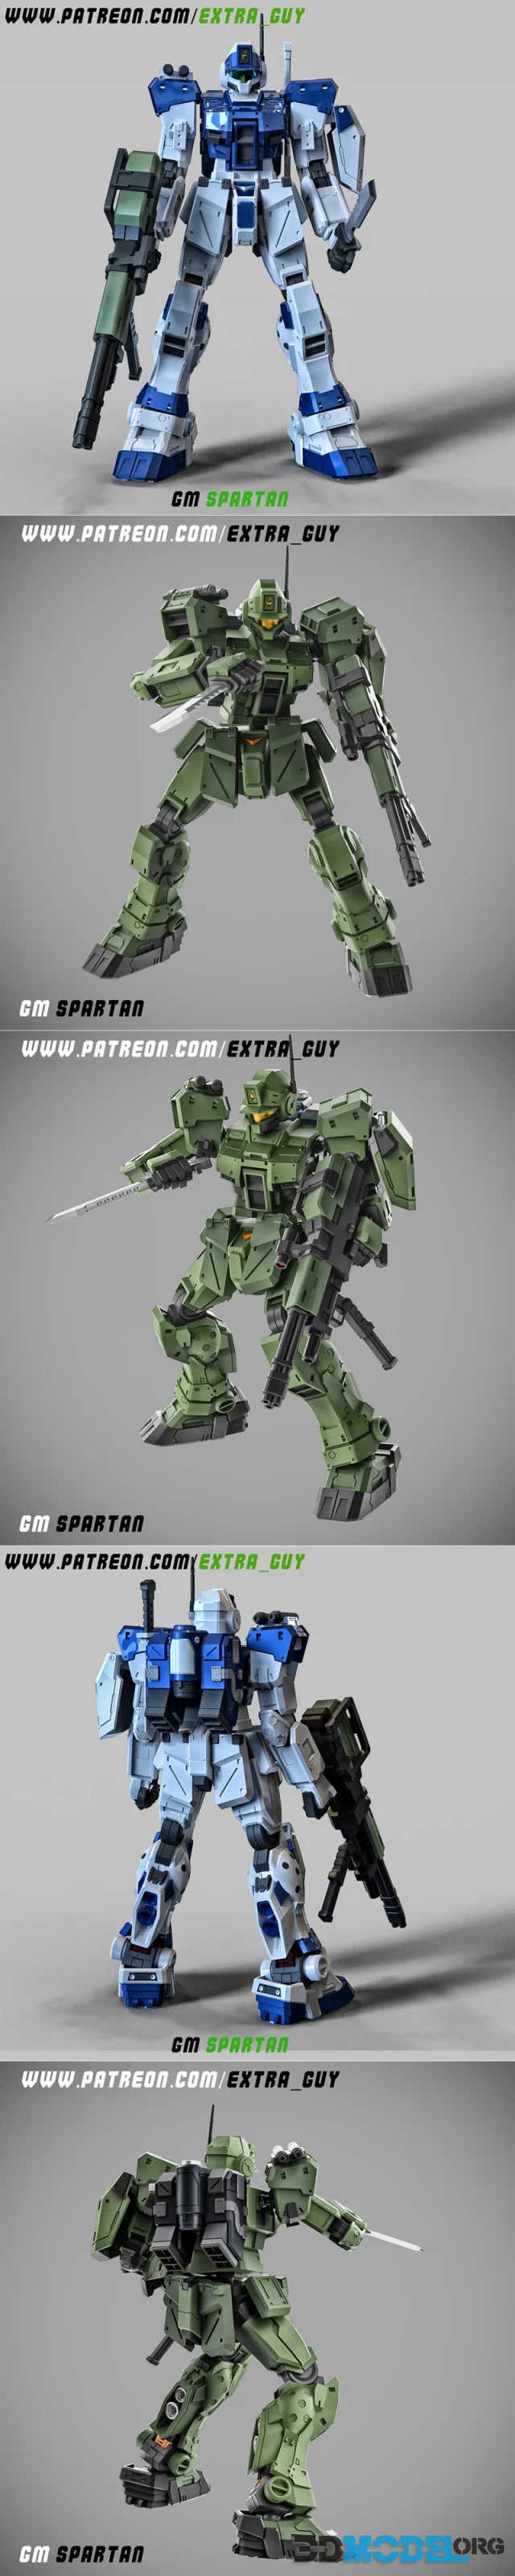 Gundam GM Spartan – Printable